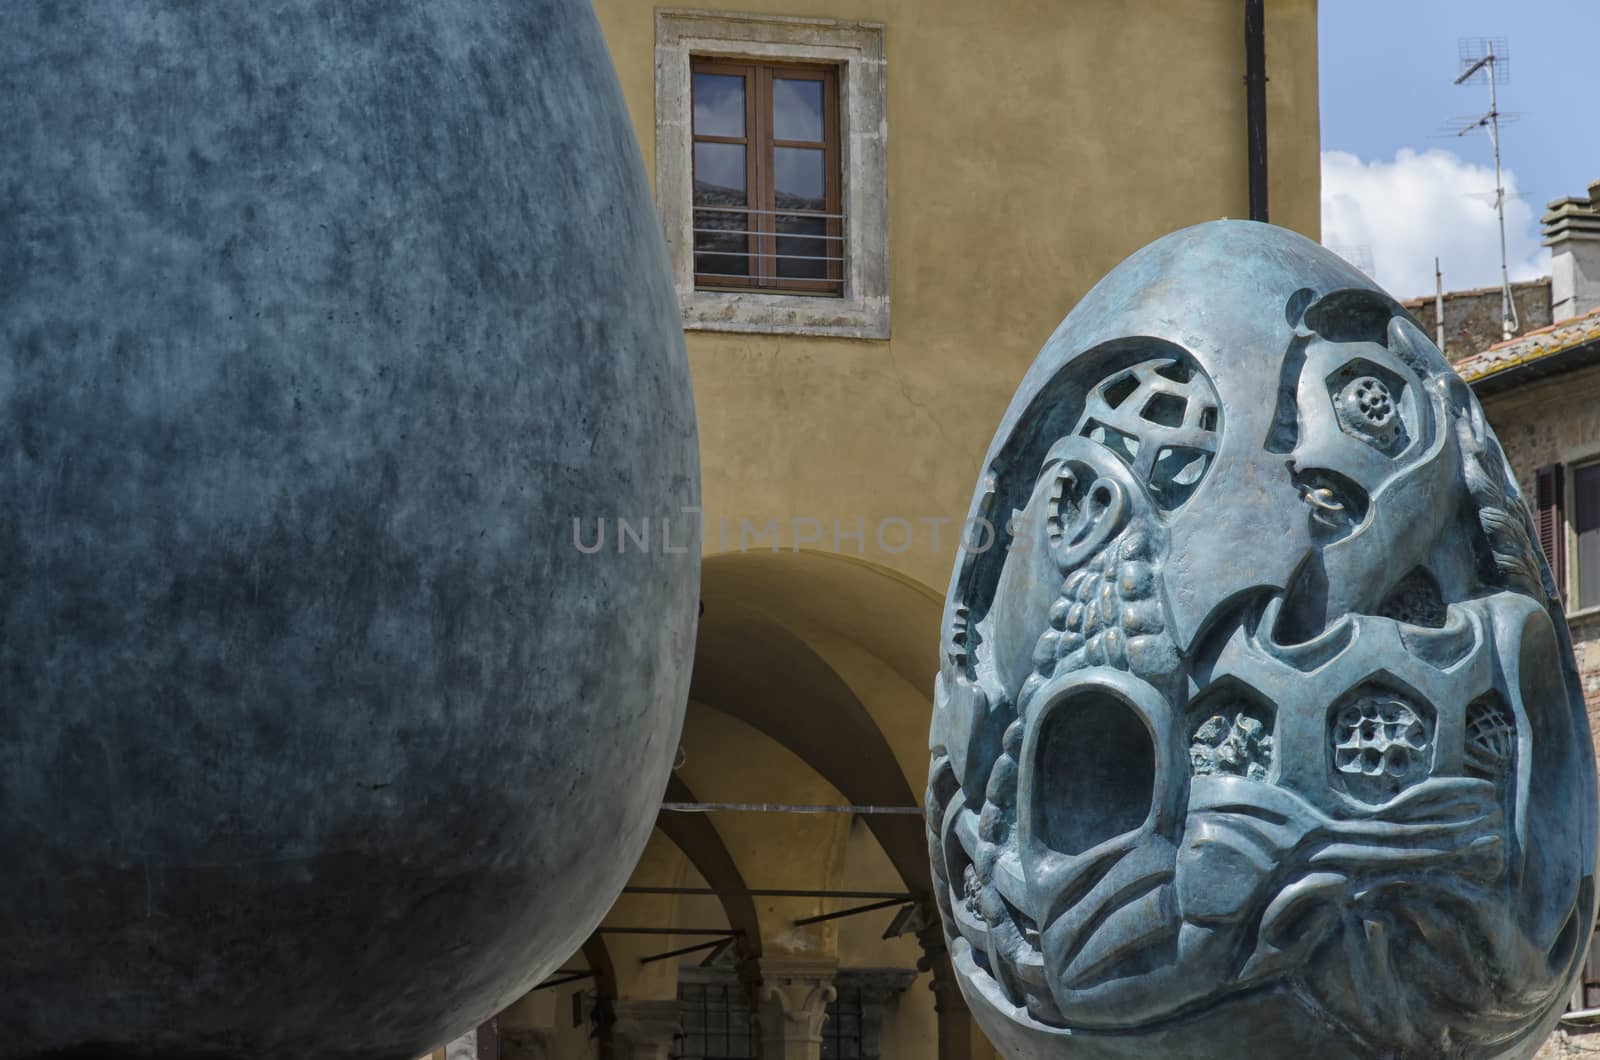 Exhibition of modern art in the center of Volterra